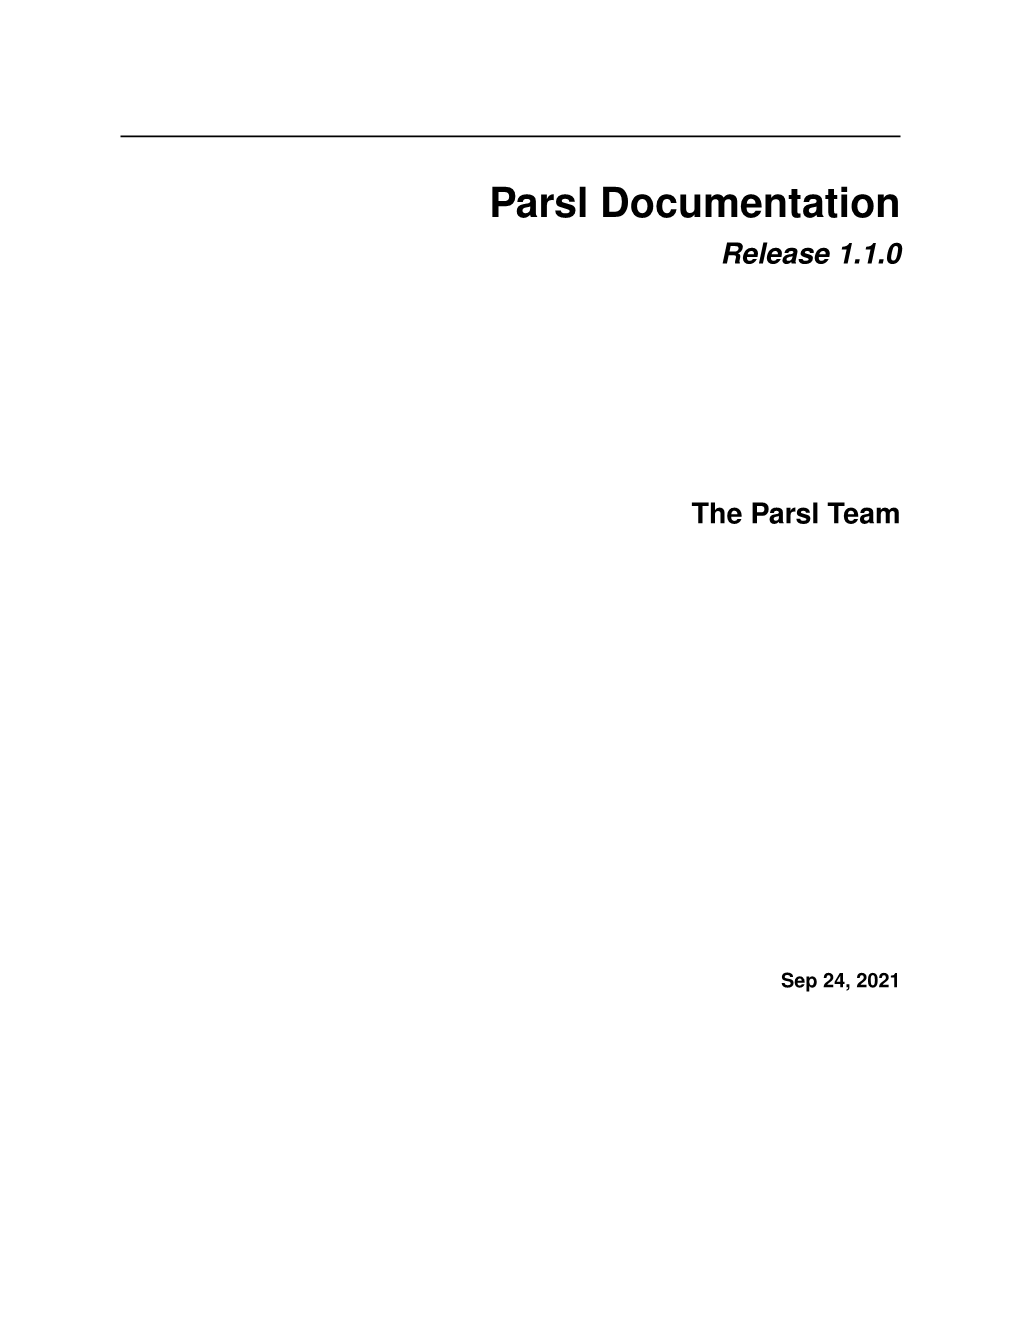 Parsl Documentation Release 1.1.0